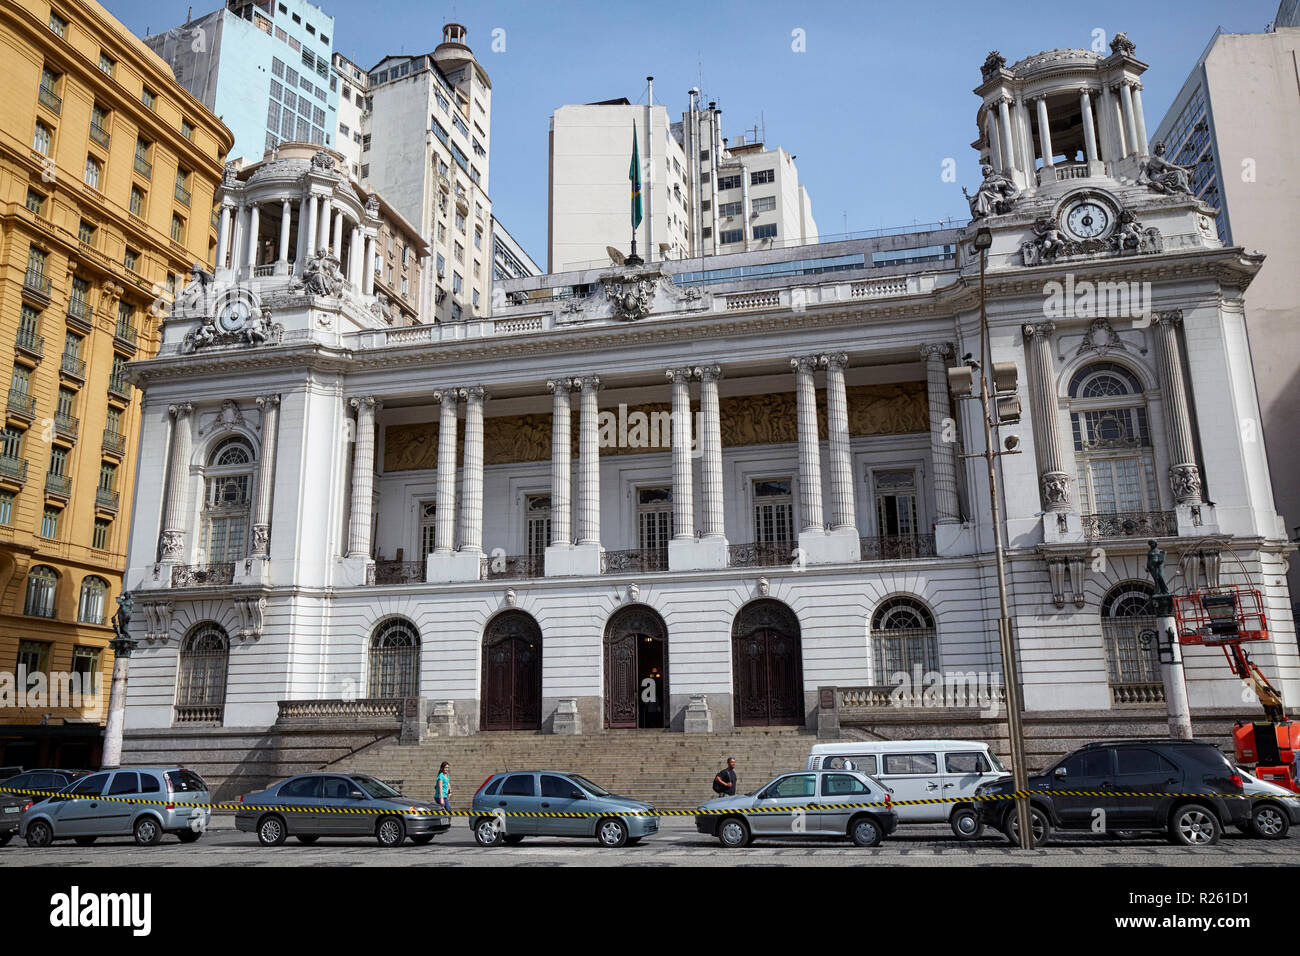 Camara Municipal City Hall in Rio de Janeiro, Brazil Stock Photo - Alamy